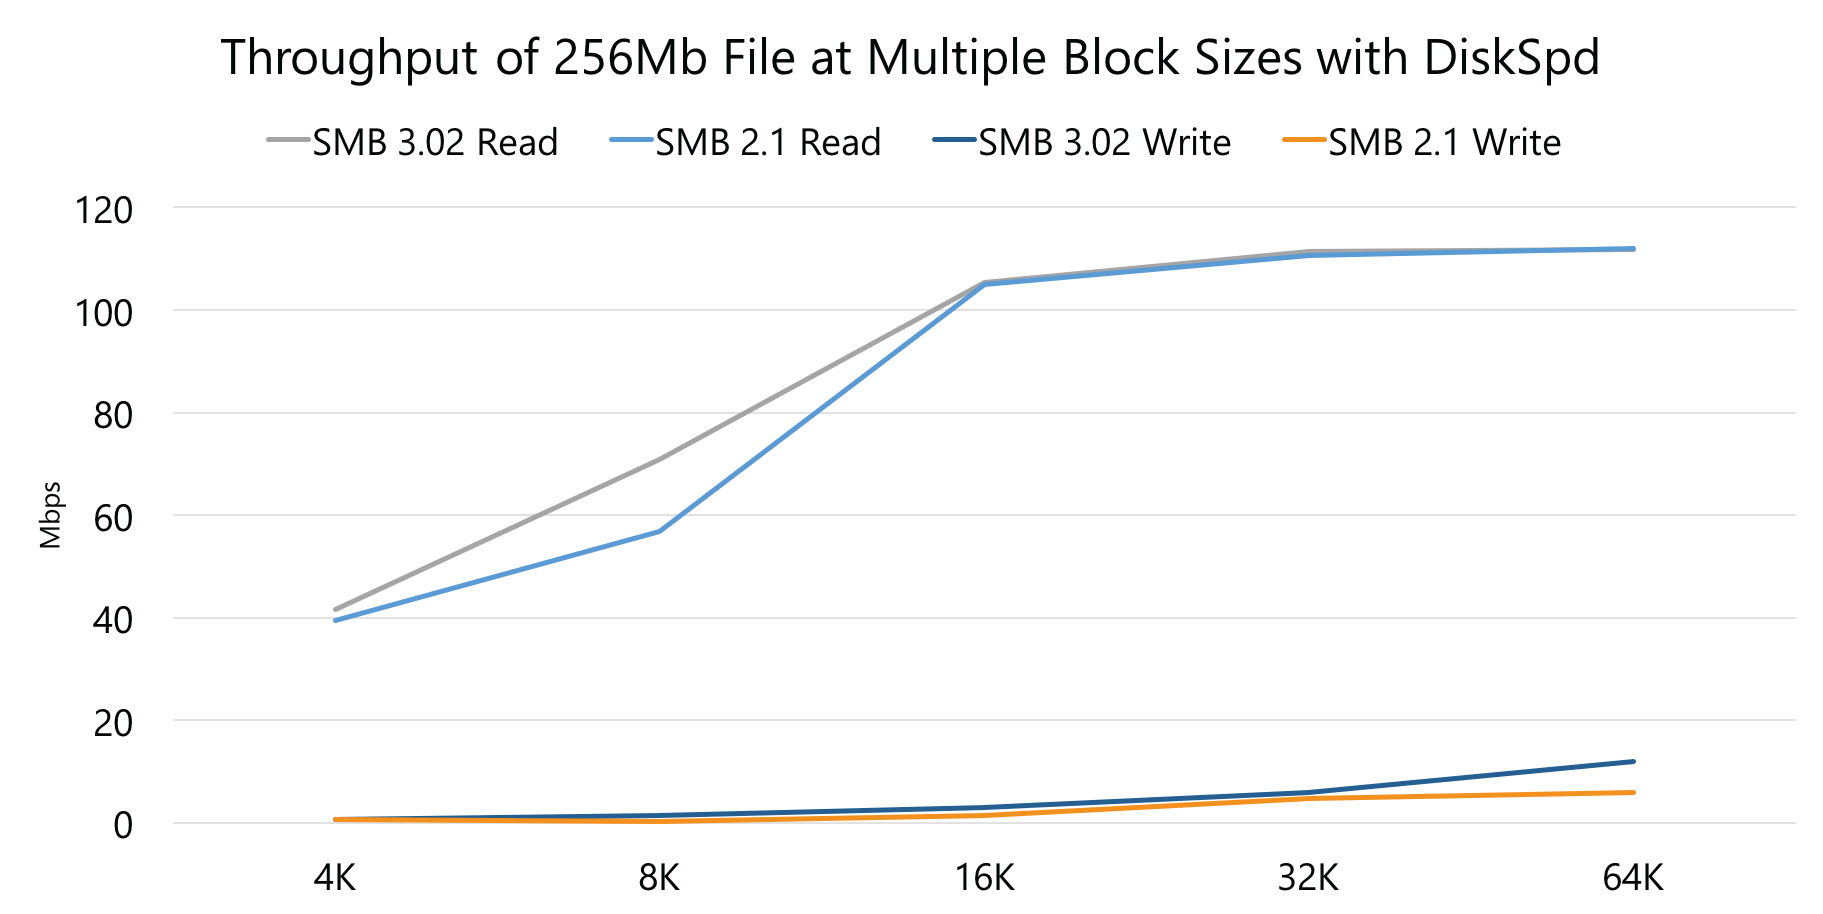 Power profile of the hypervisor host impacts 4K/8K block performance